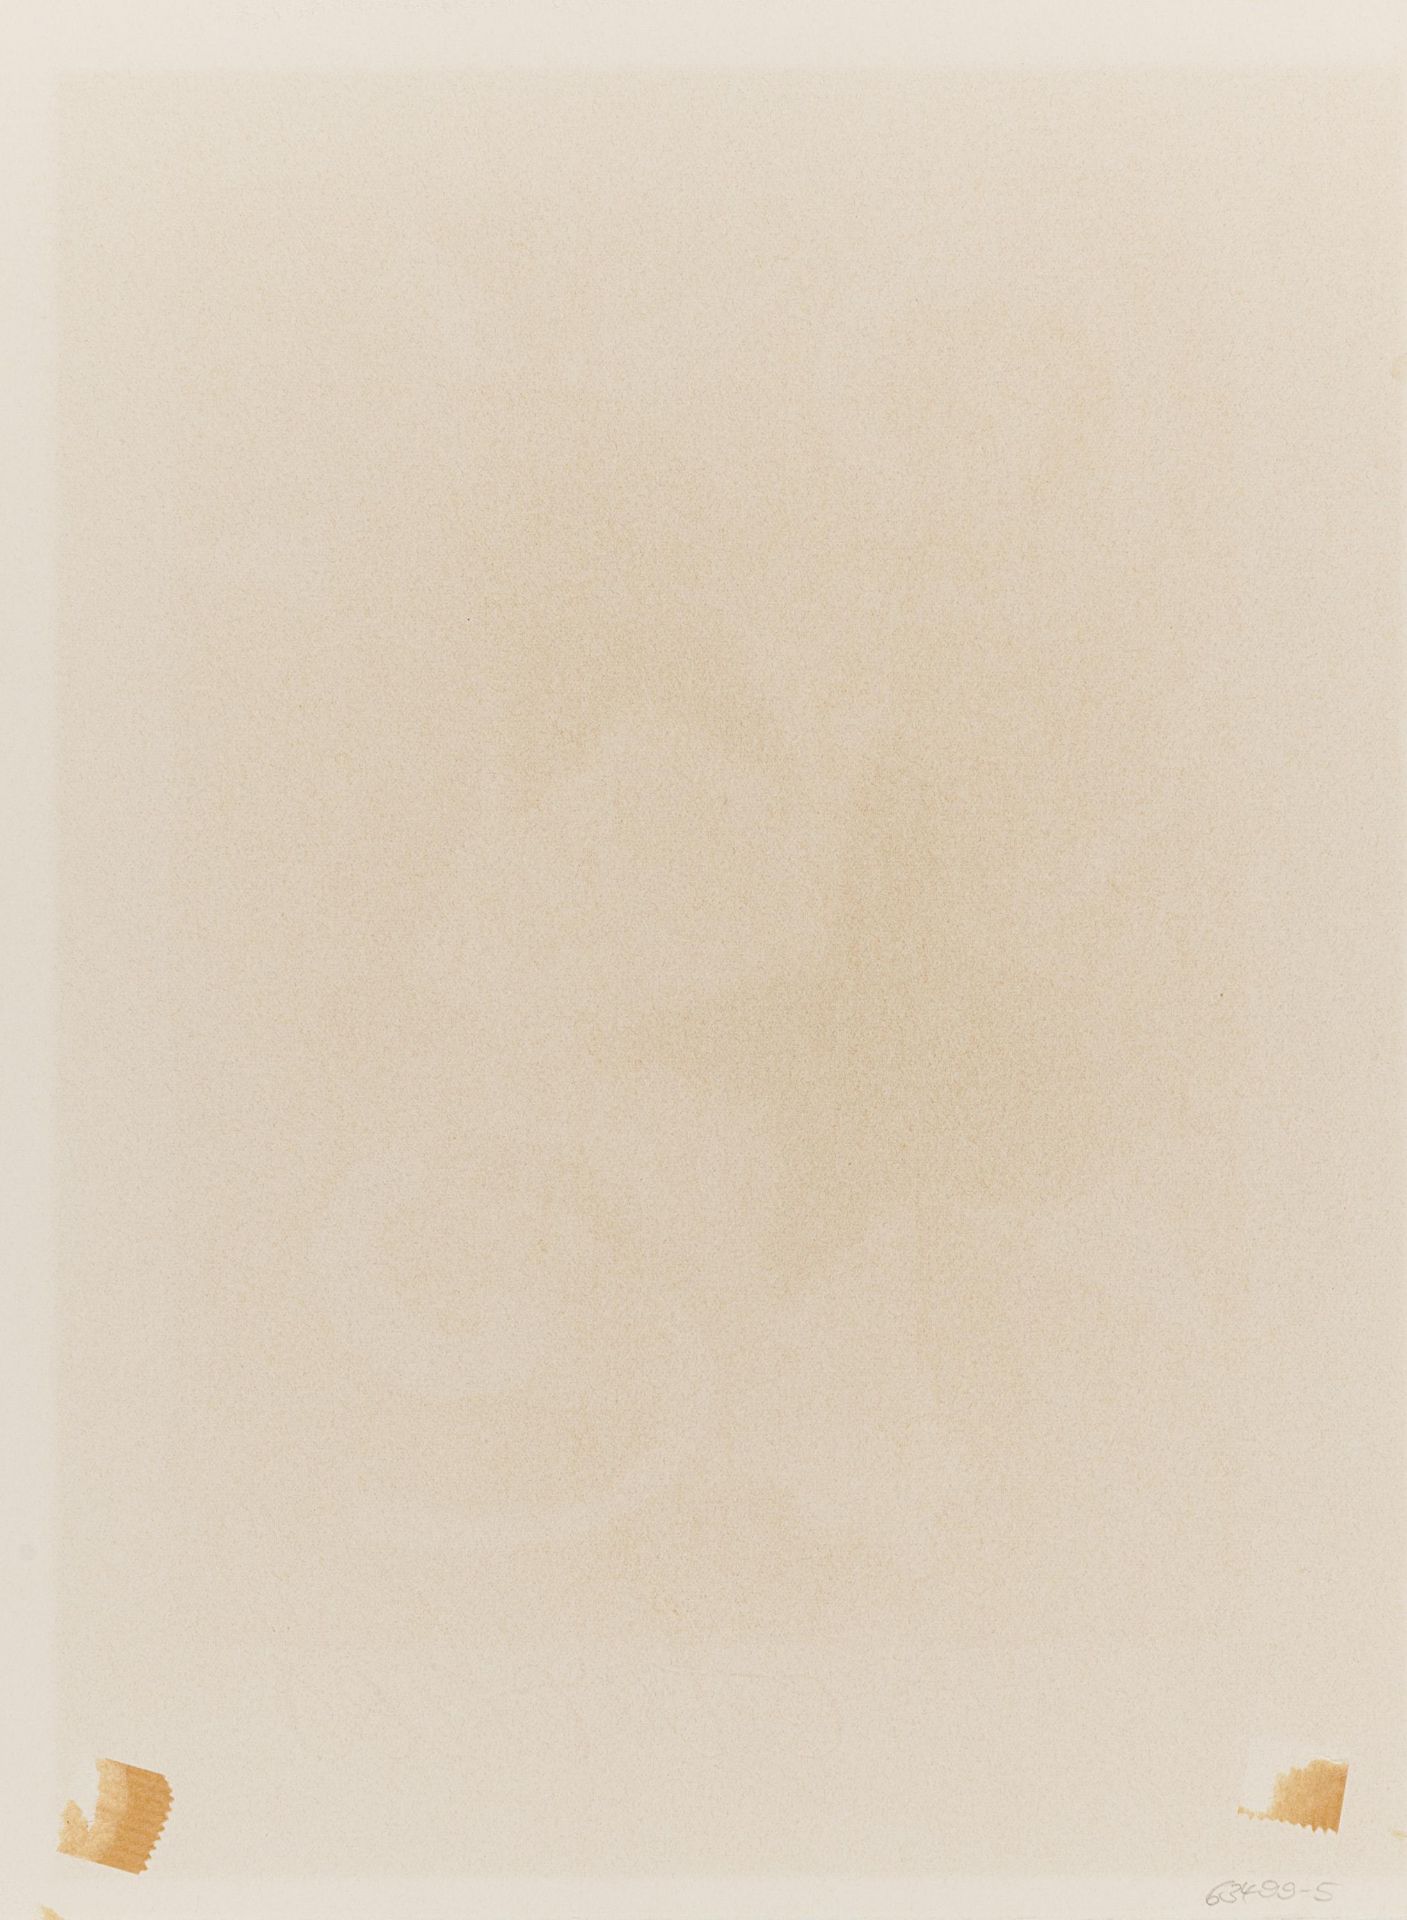 Braque, Georges1881 Argenteuil - 1963 ParisAus: Lettera Amorosa. 1963. Farblithografie auf Arches ( - Image 3 of 3